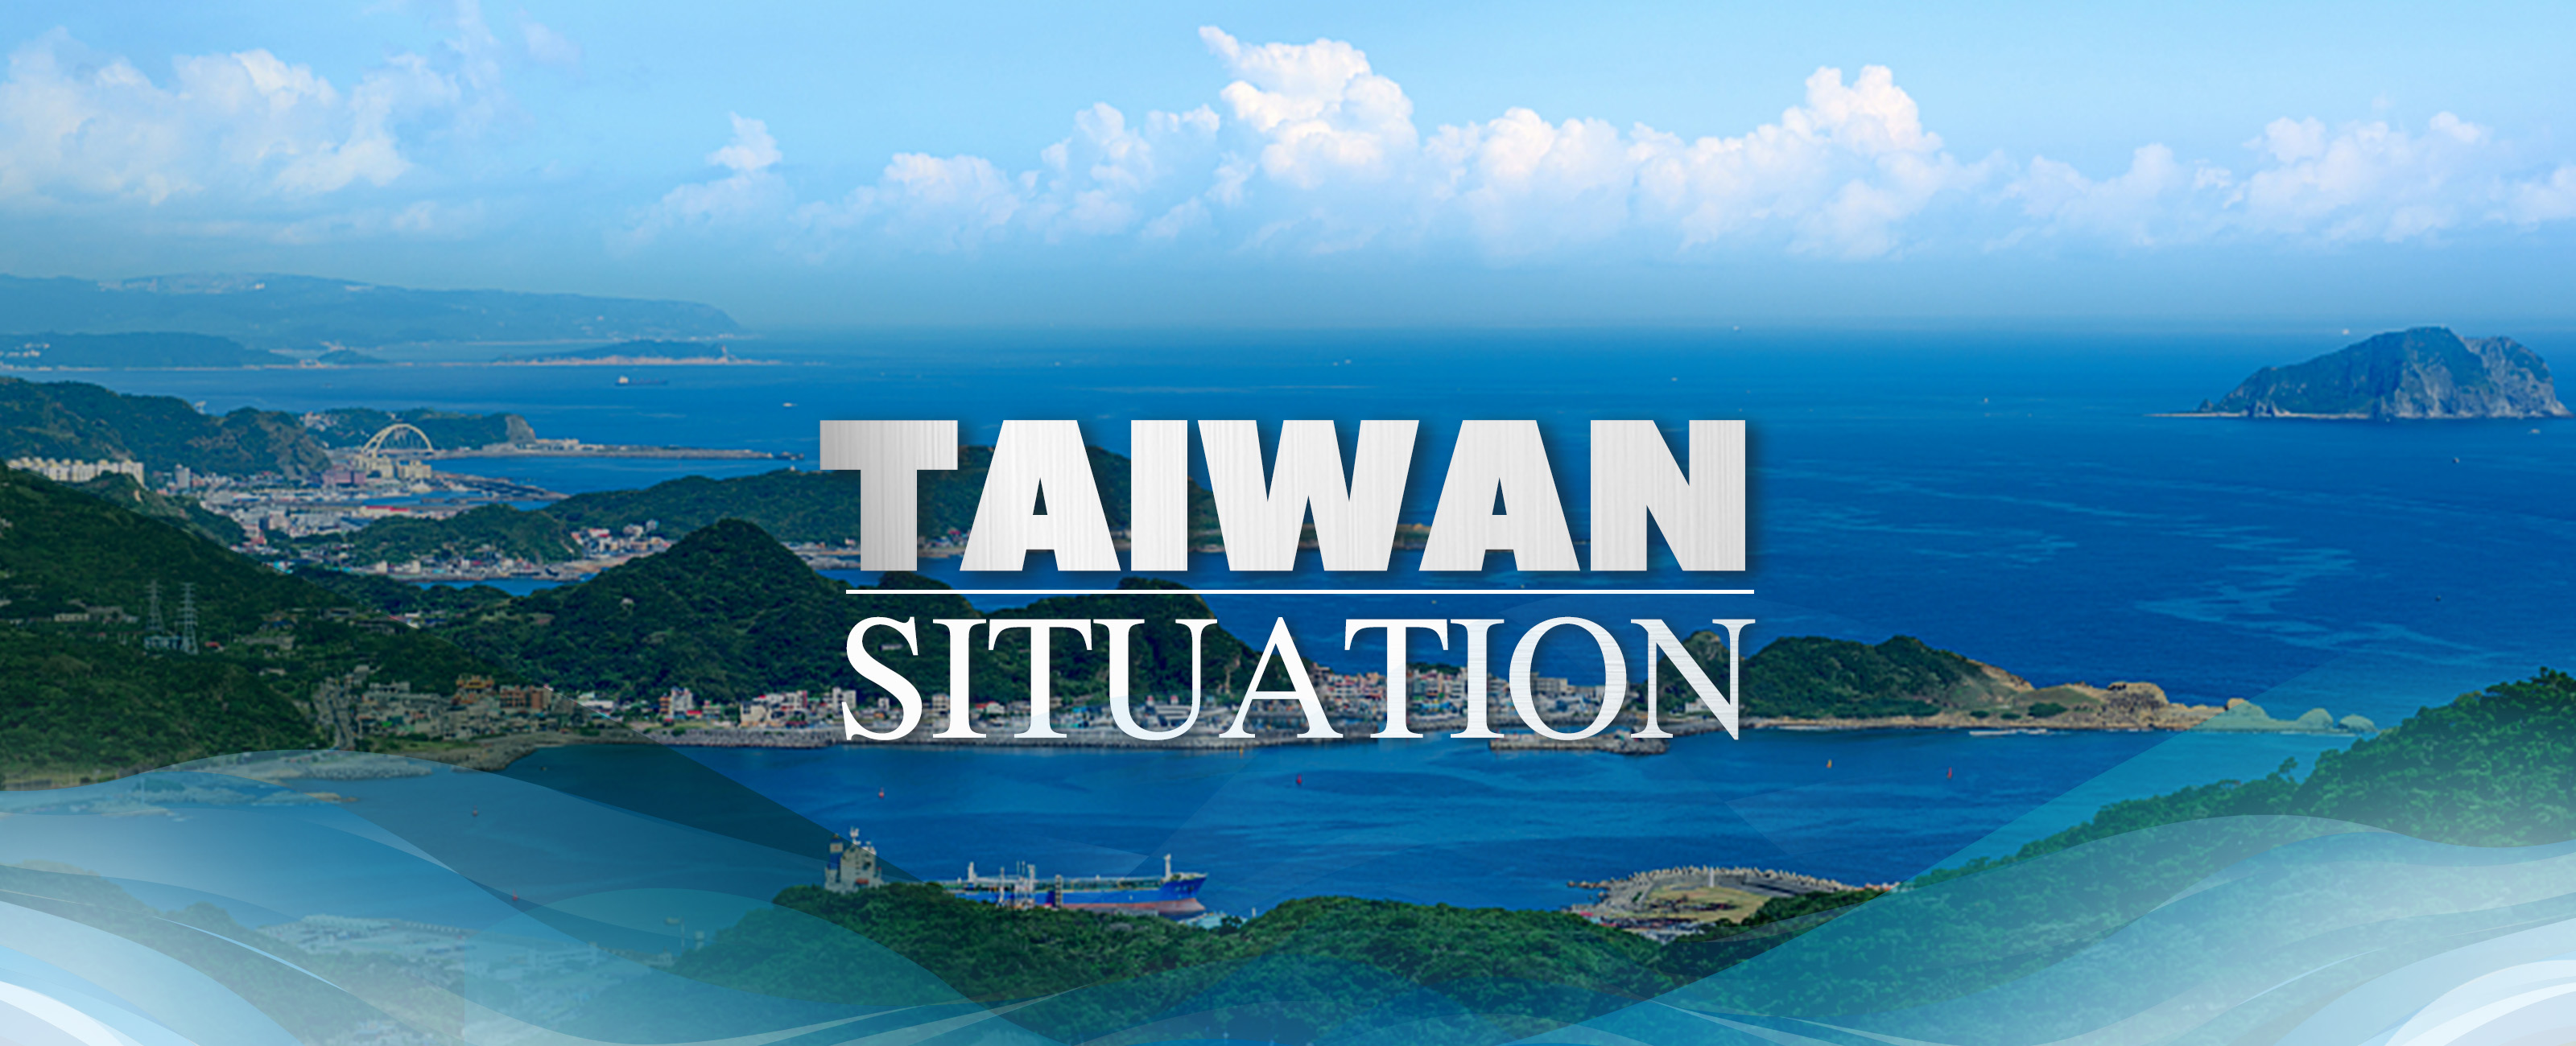 Taiwan Situation